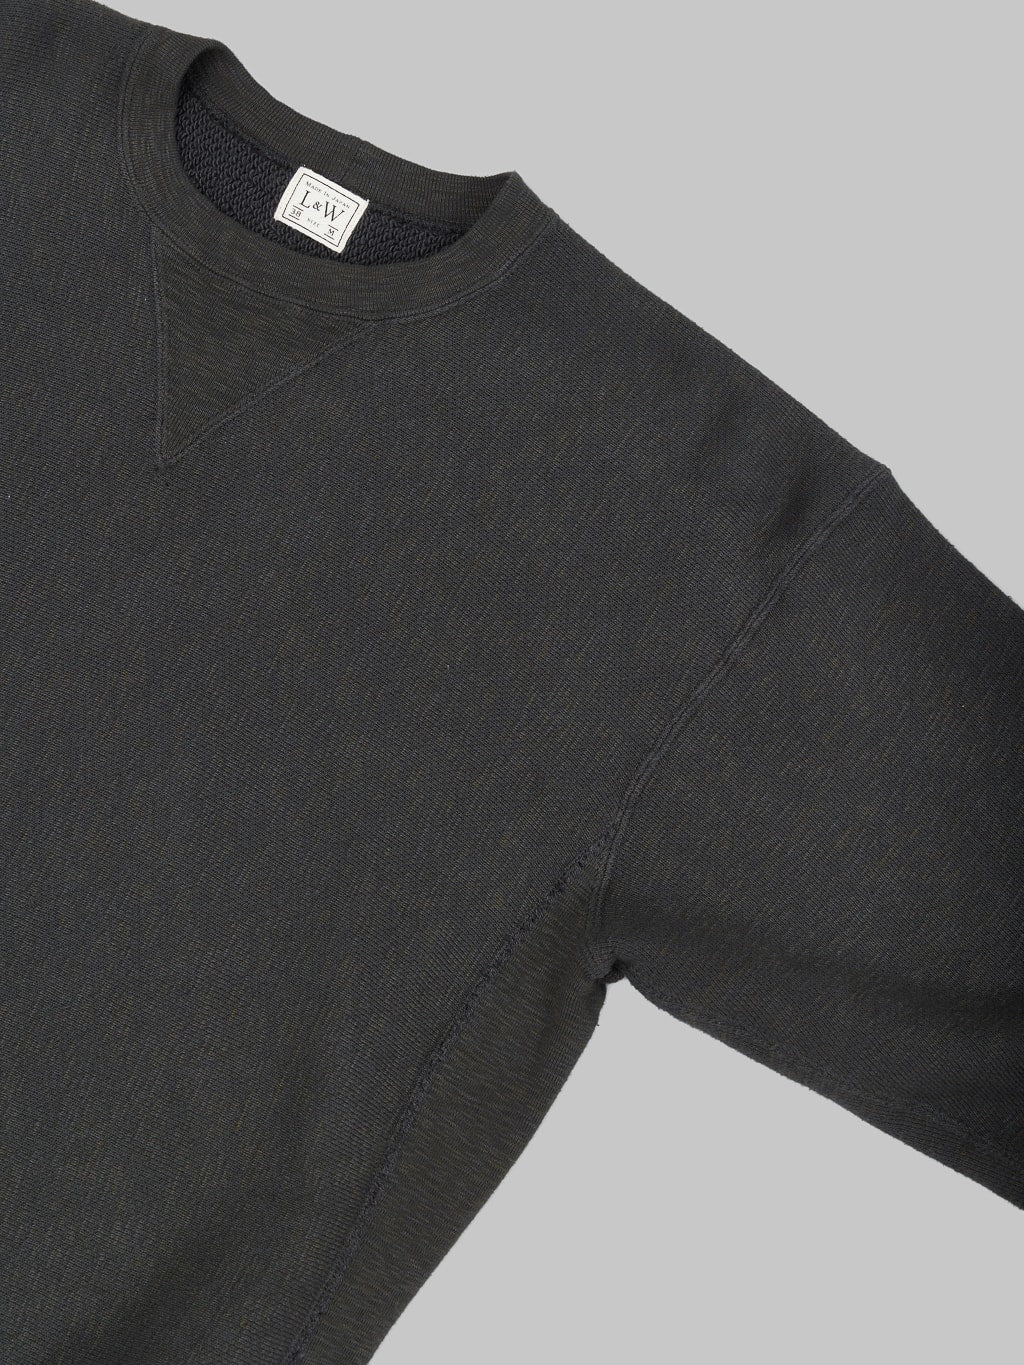 loop and weft big loopback fleece side panel sweatshirt black cotton fabric